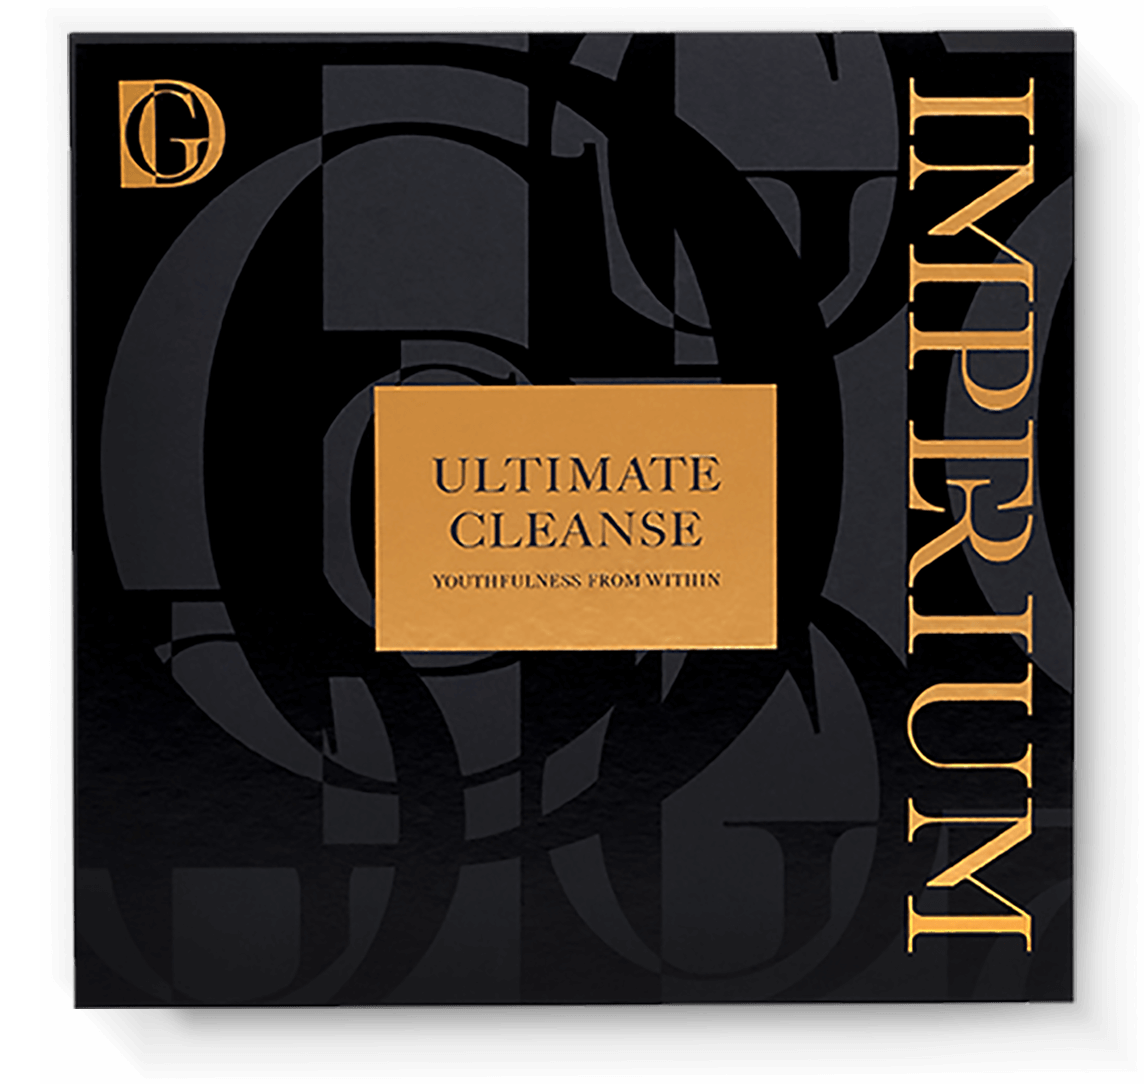 Ultimate Cleanse - IMPERIUM GRP PTE LTD